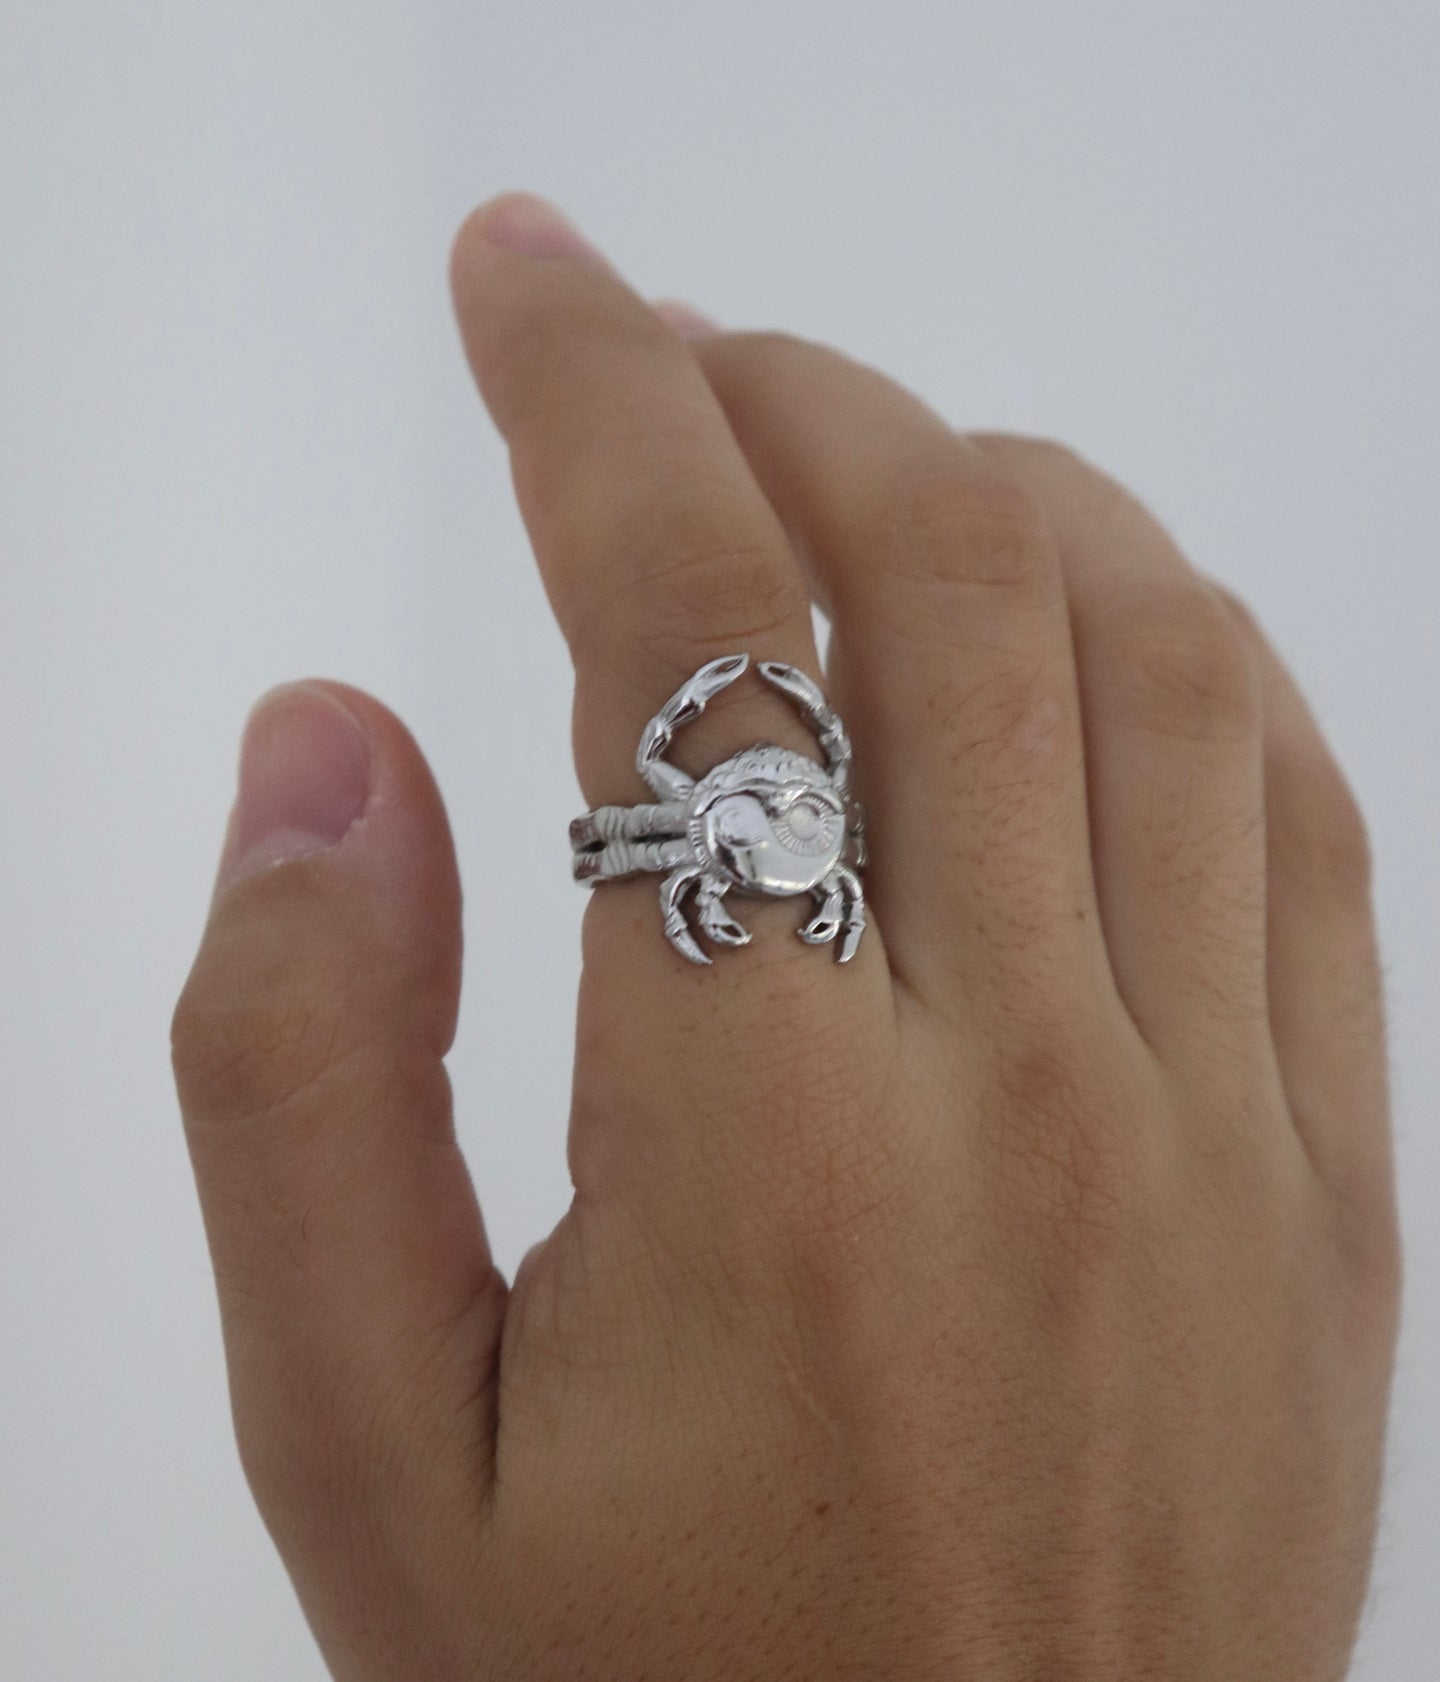 Cancer Ring - Fashion Jewelry by Yordy.